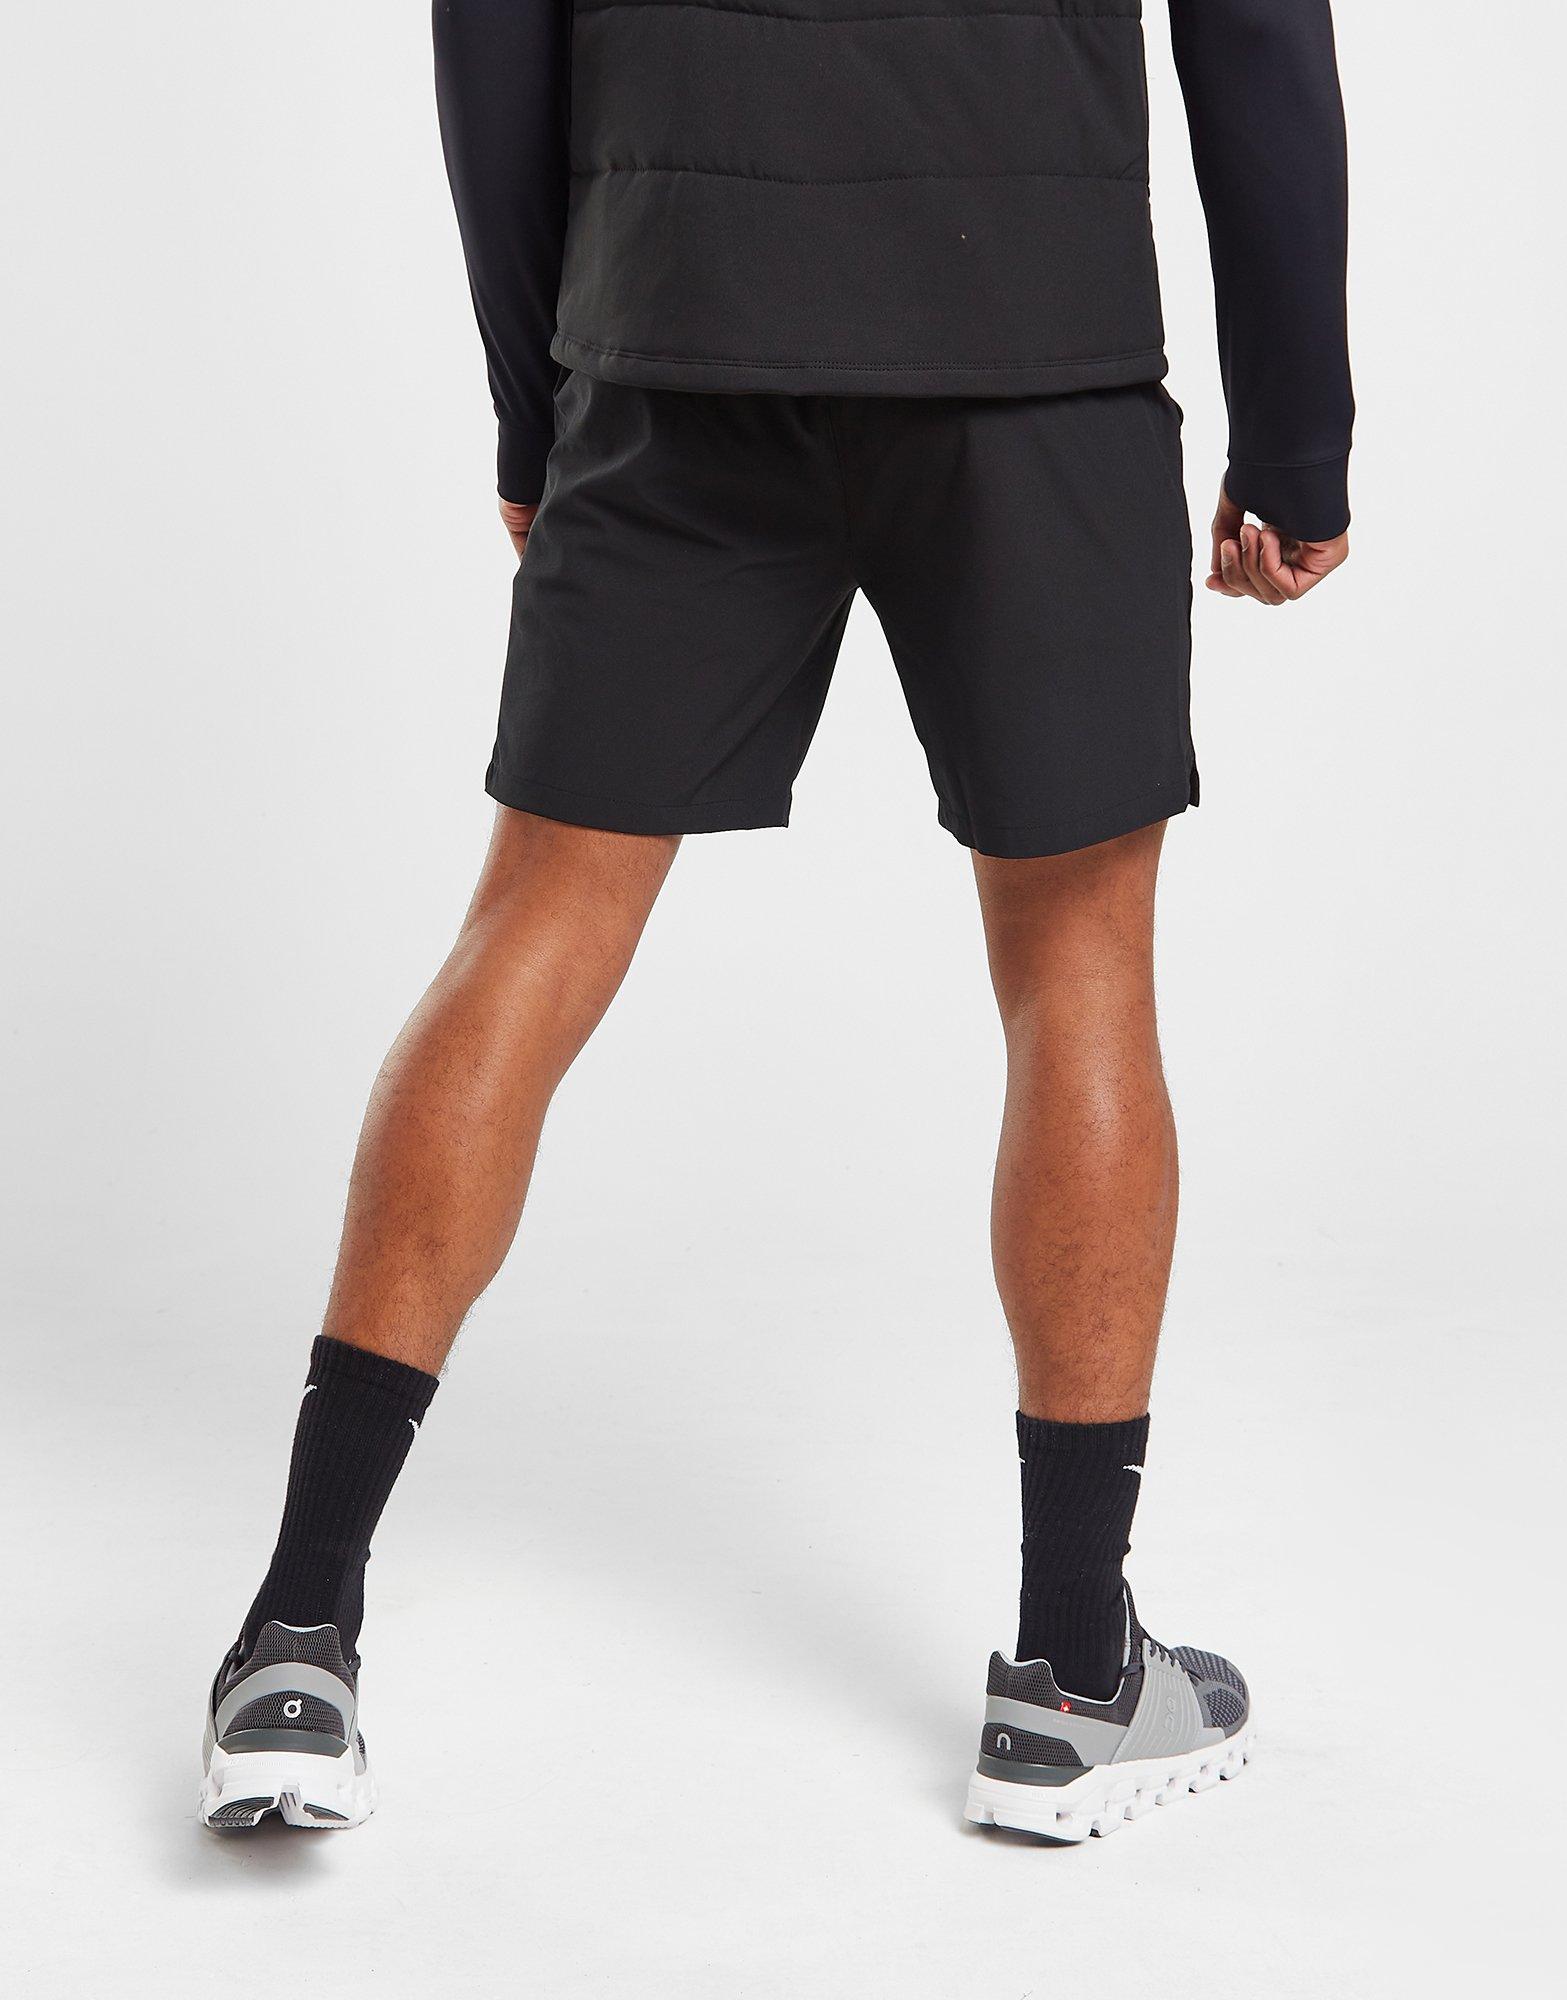 Black Castore Protek 7 Woven Shorts - JD Sports